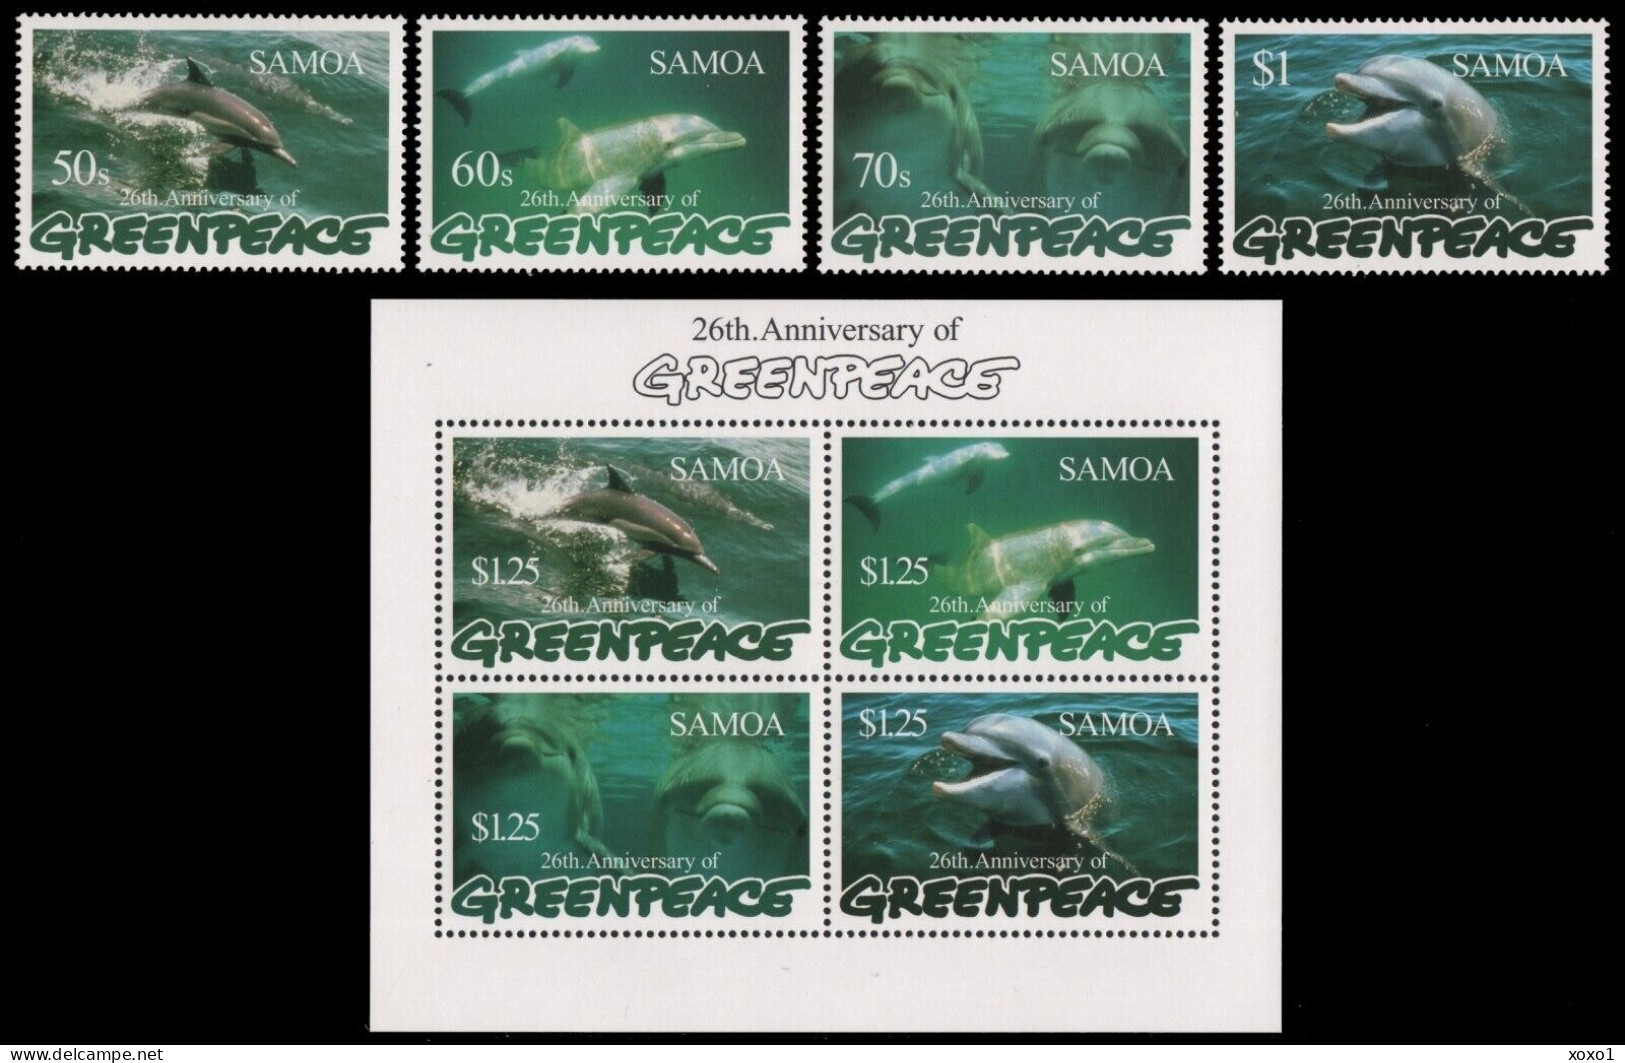 Samoa 1997 MiNr. 860 - 867 (Block 62) Marine Mammals, Common Bottlenose Dolphins, Greenpeace 4v + S/sh MNH** 9.80 € - Dauphins